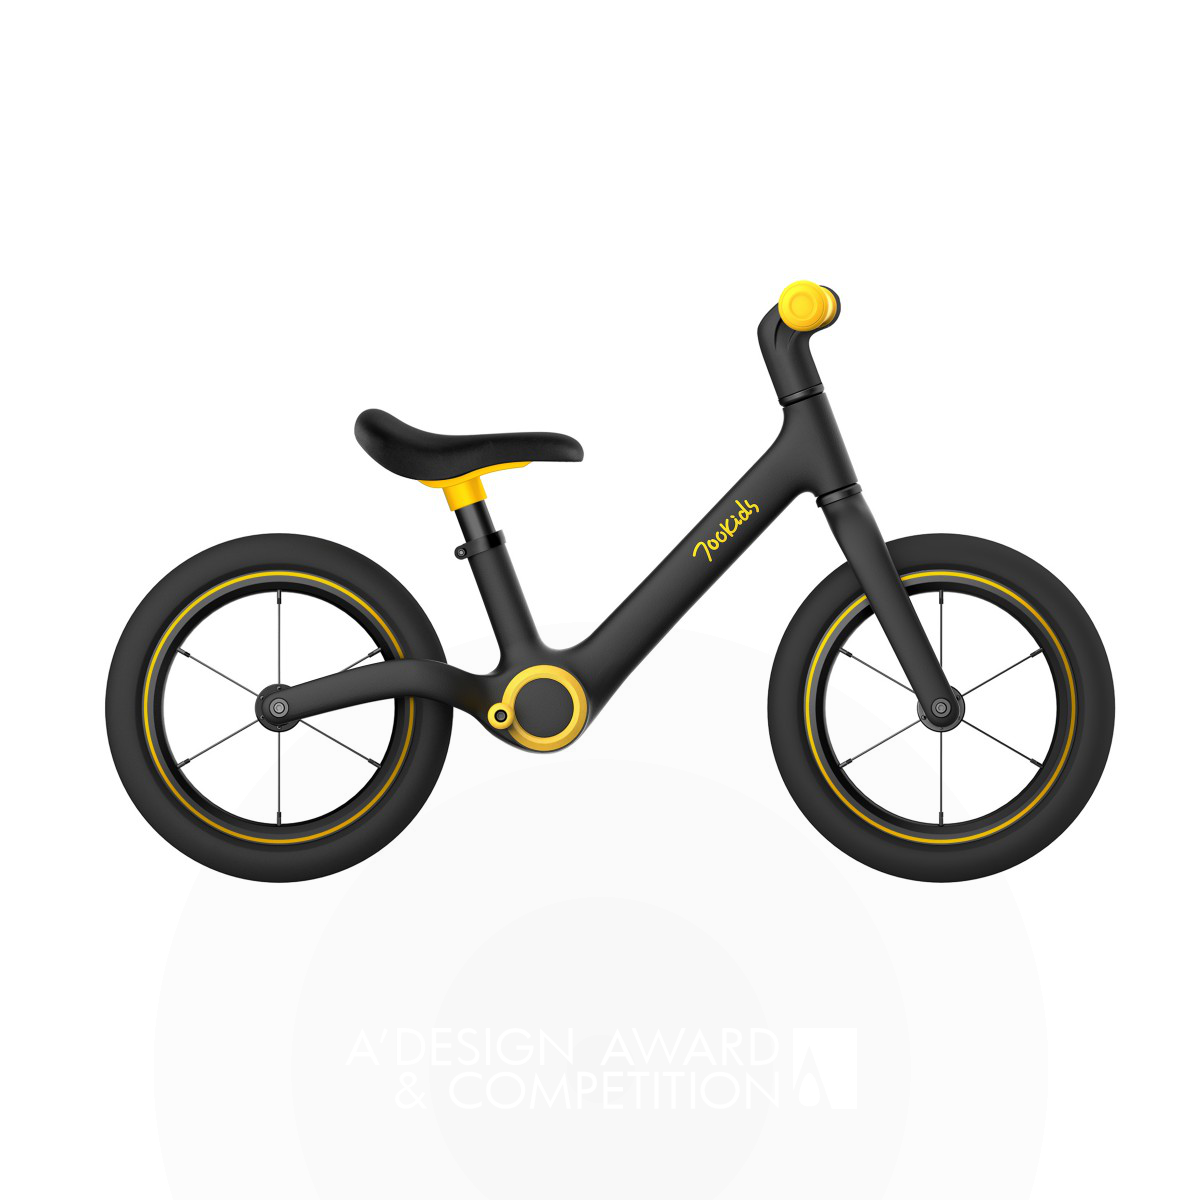 700kids 균형 자전거: 창의적인 기술로 만든 아이들의 안전한 놀이 도구